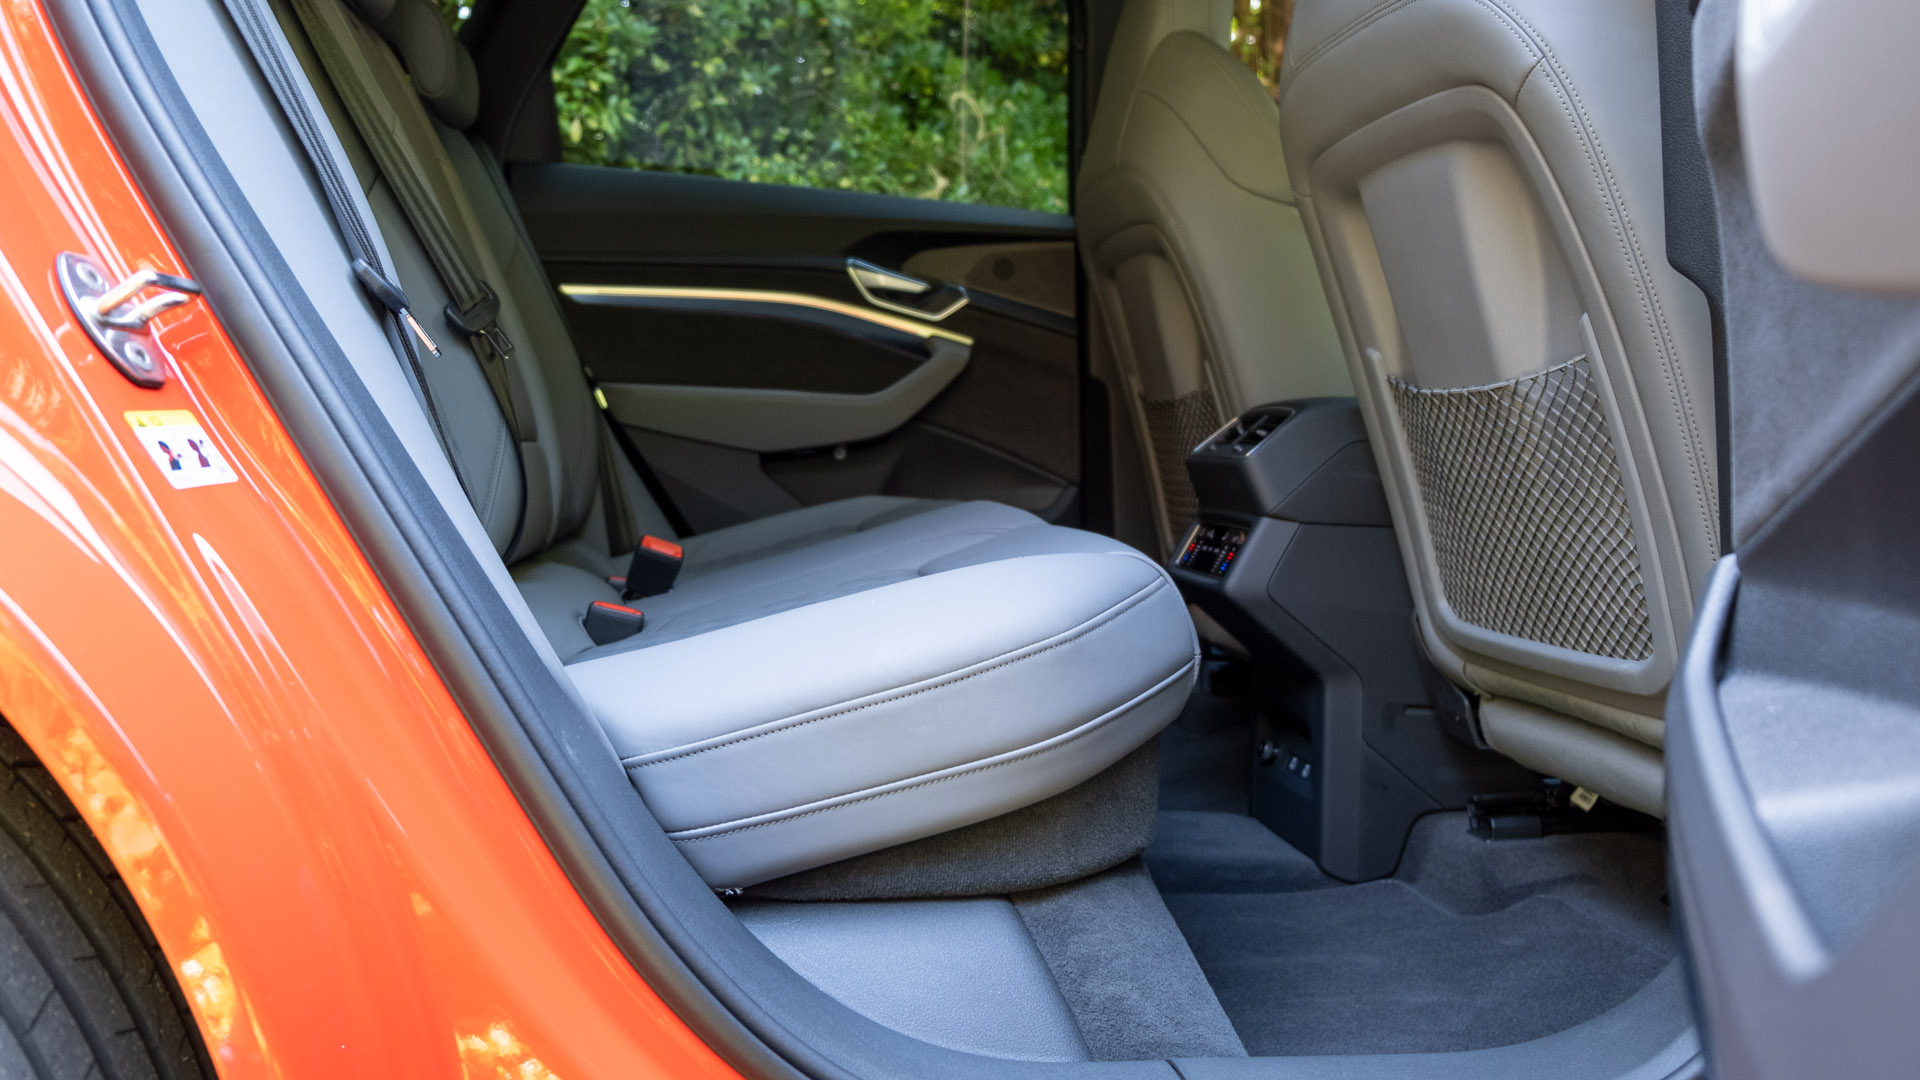 Audi e-tron S rear seat design